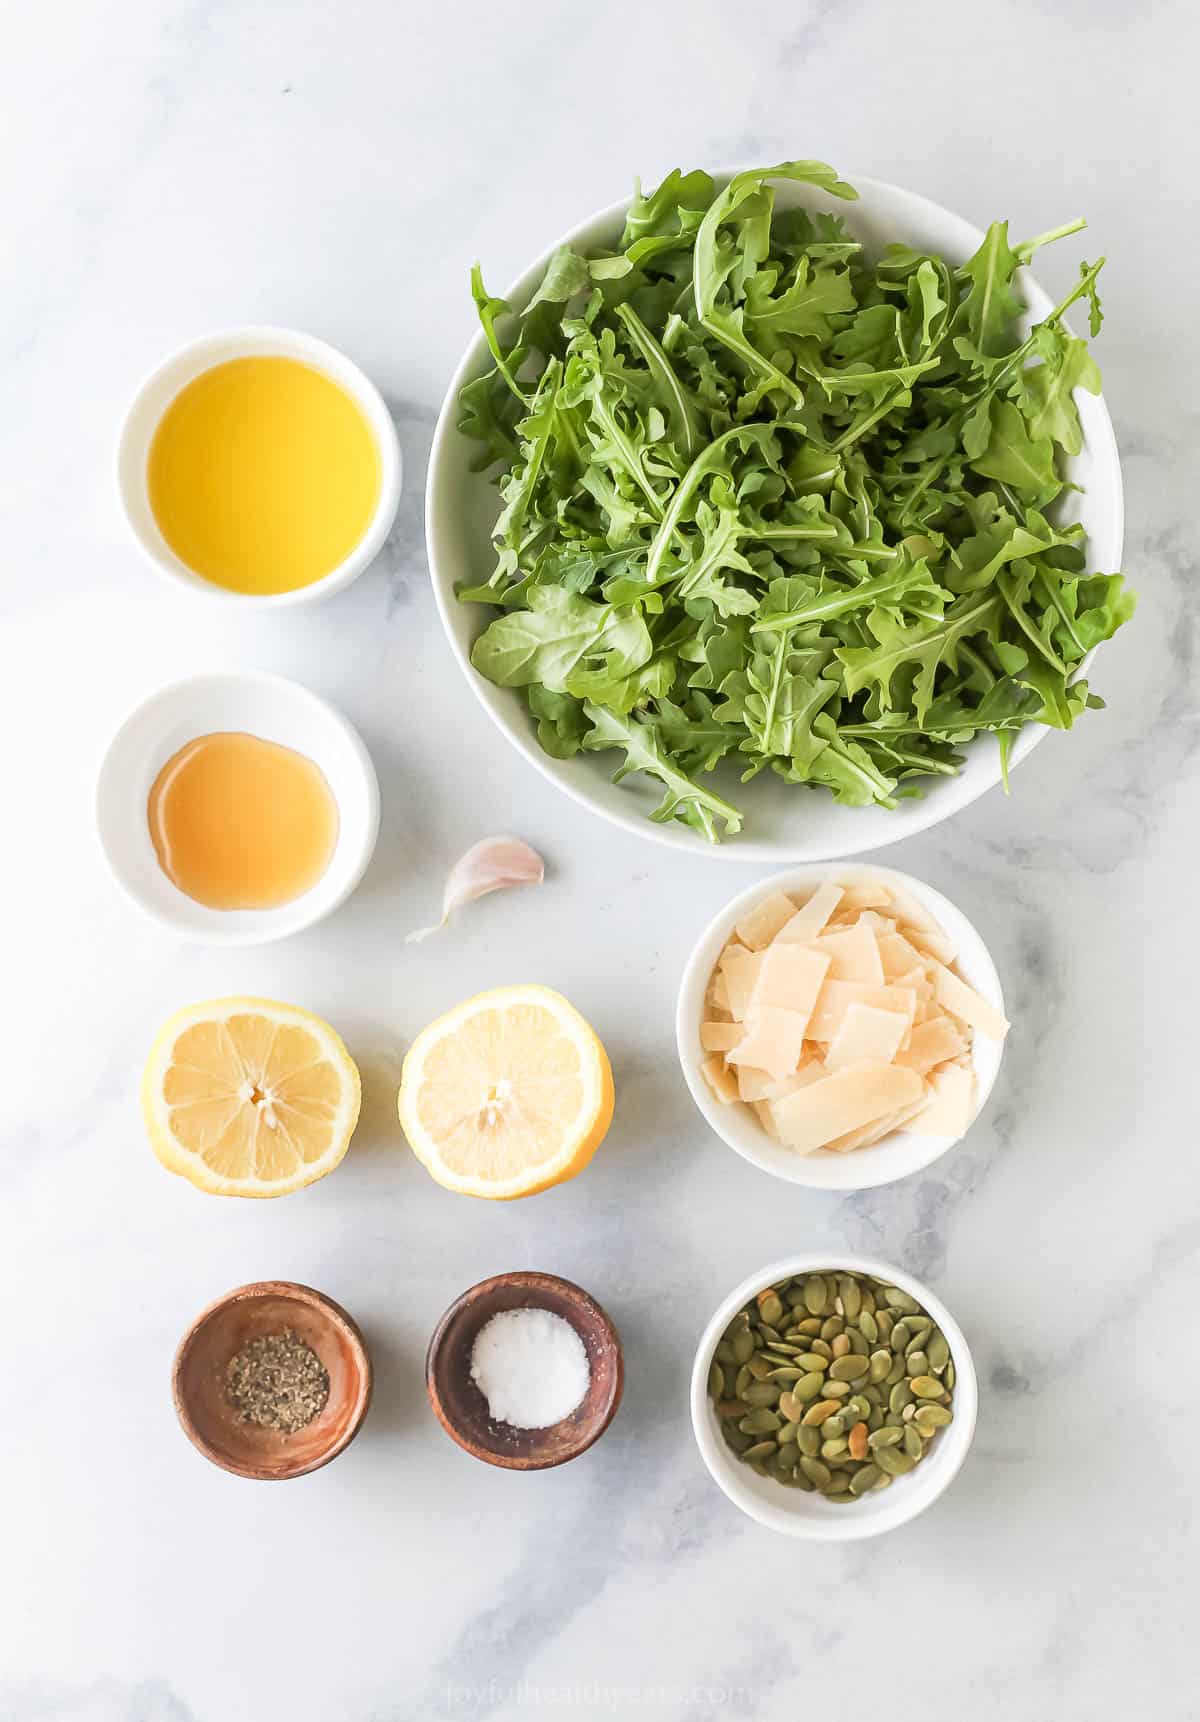 Ingredients for simple arugula salad.